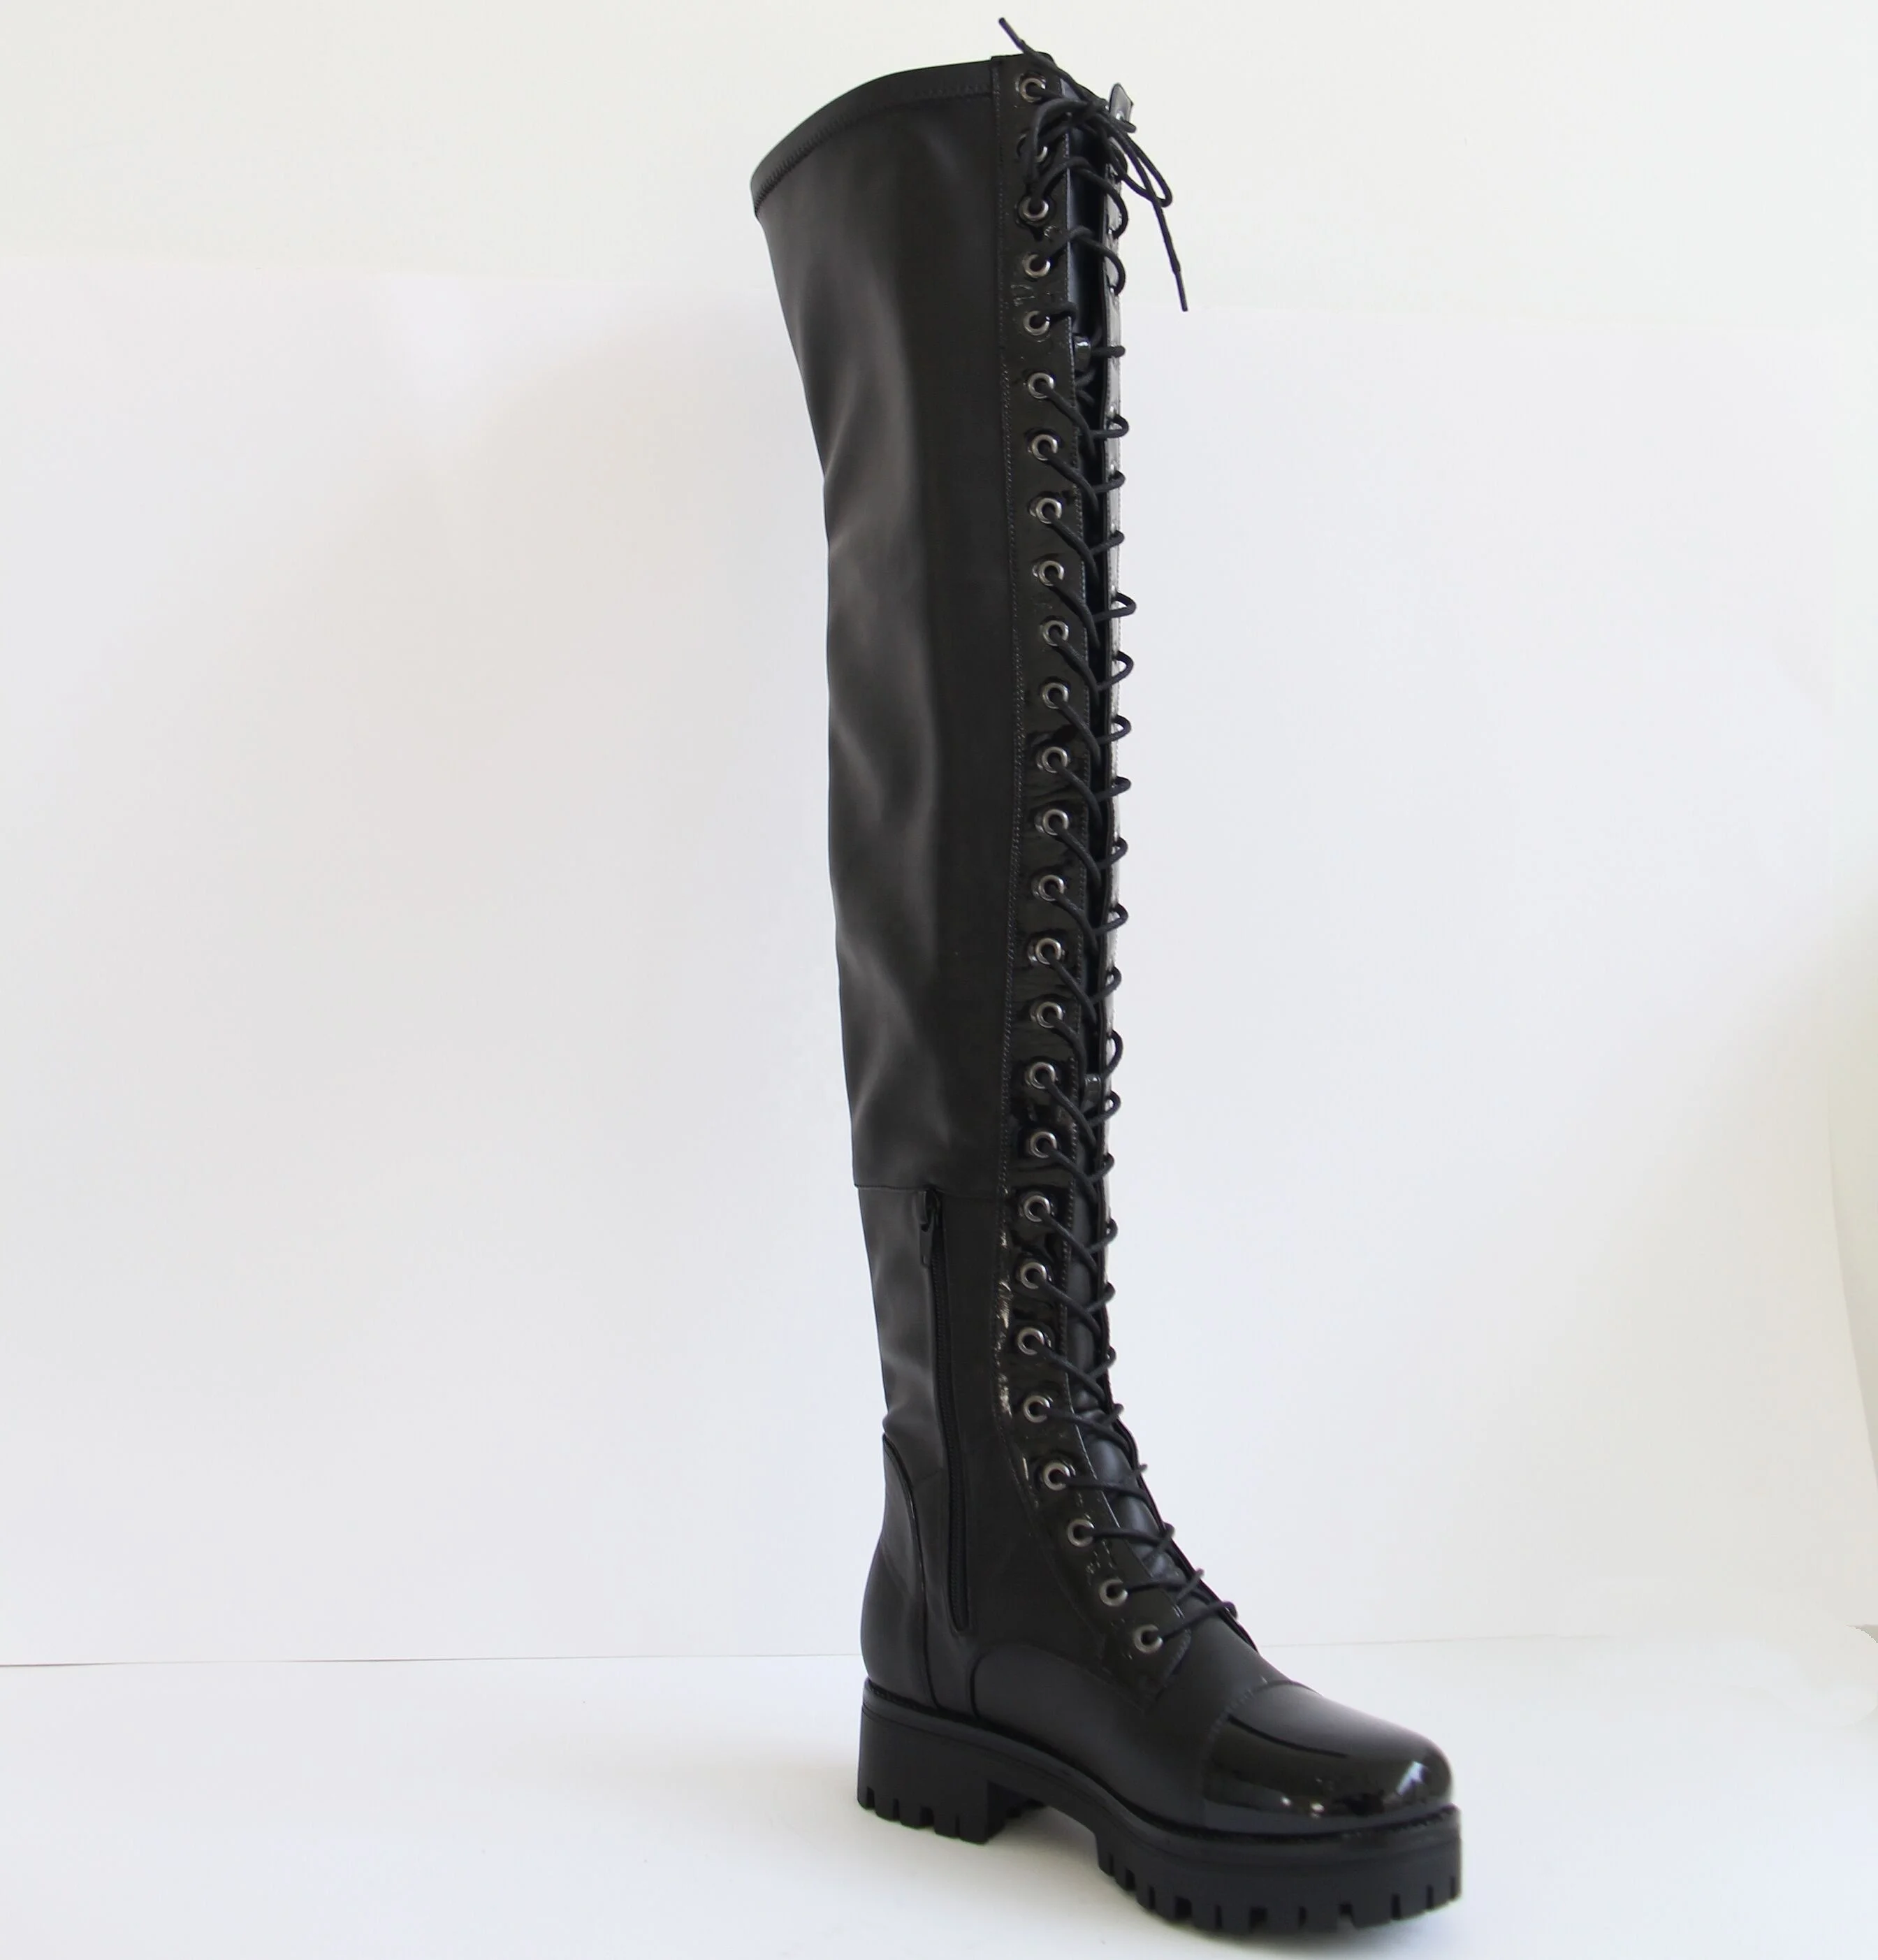 wholesale fashion boots